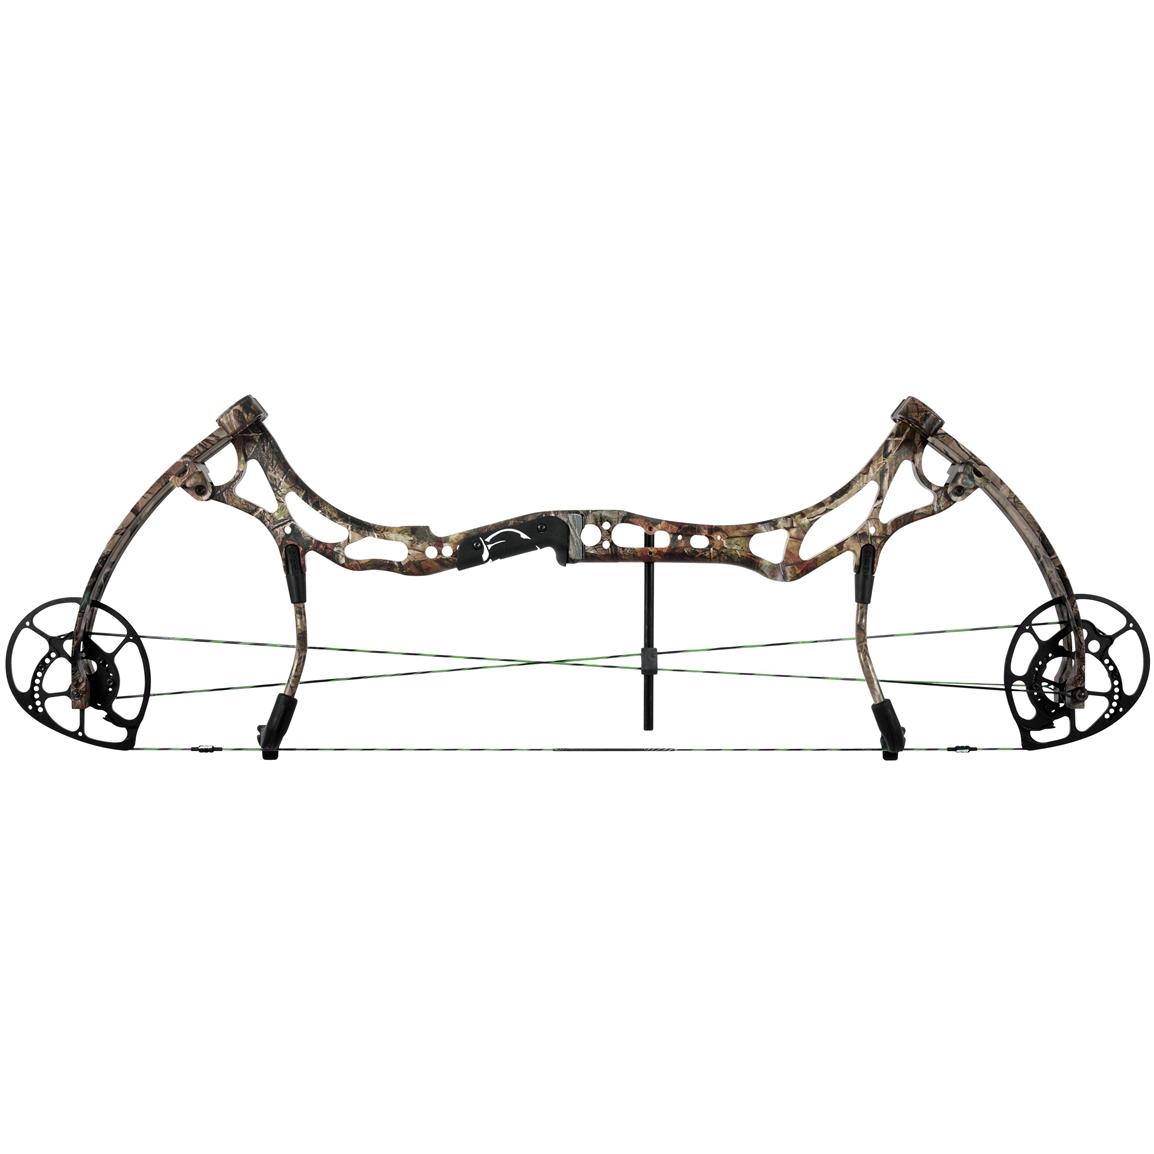 Bear Archery  Method Compound Bow Realtree  Camo   236495 Bows At    